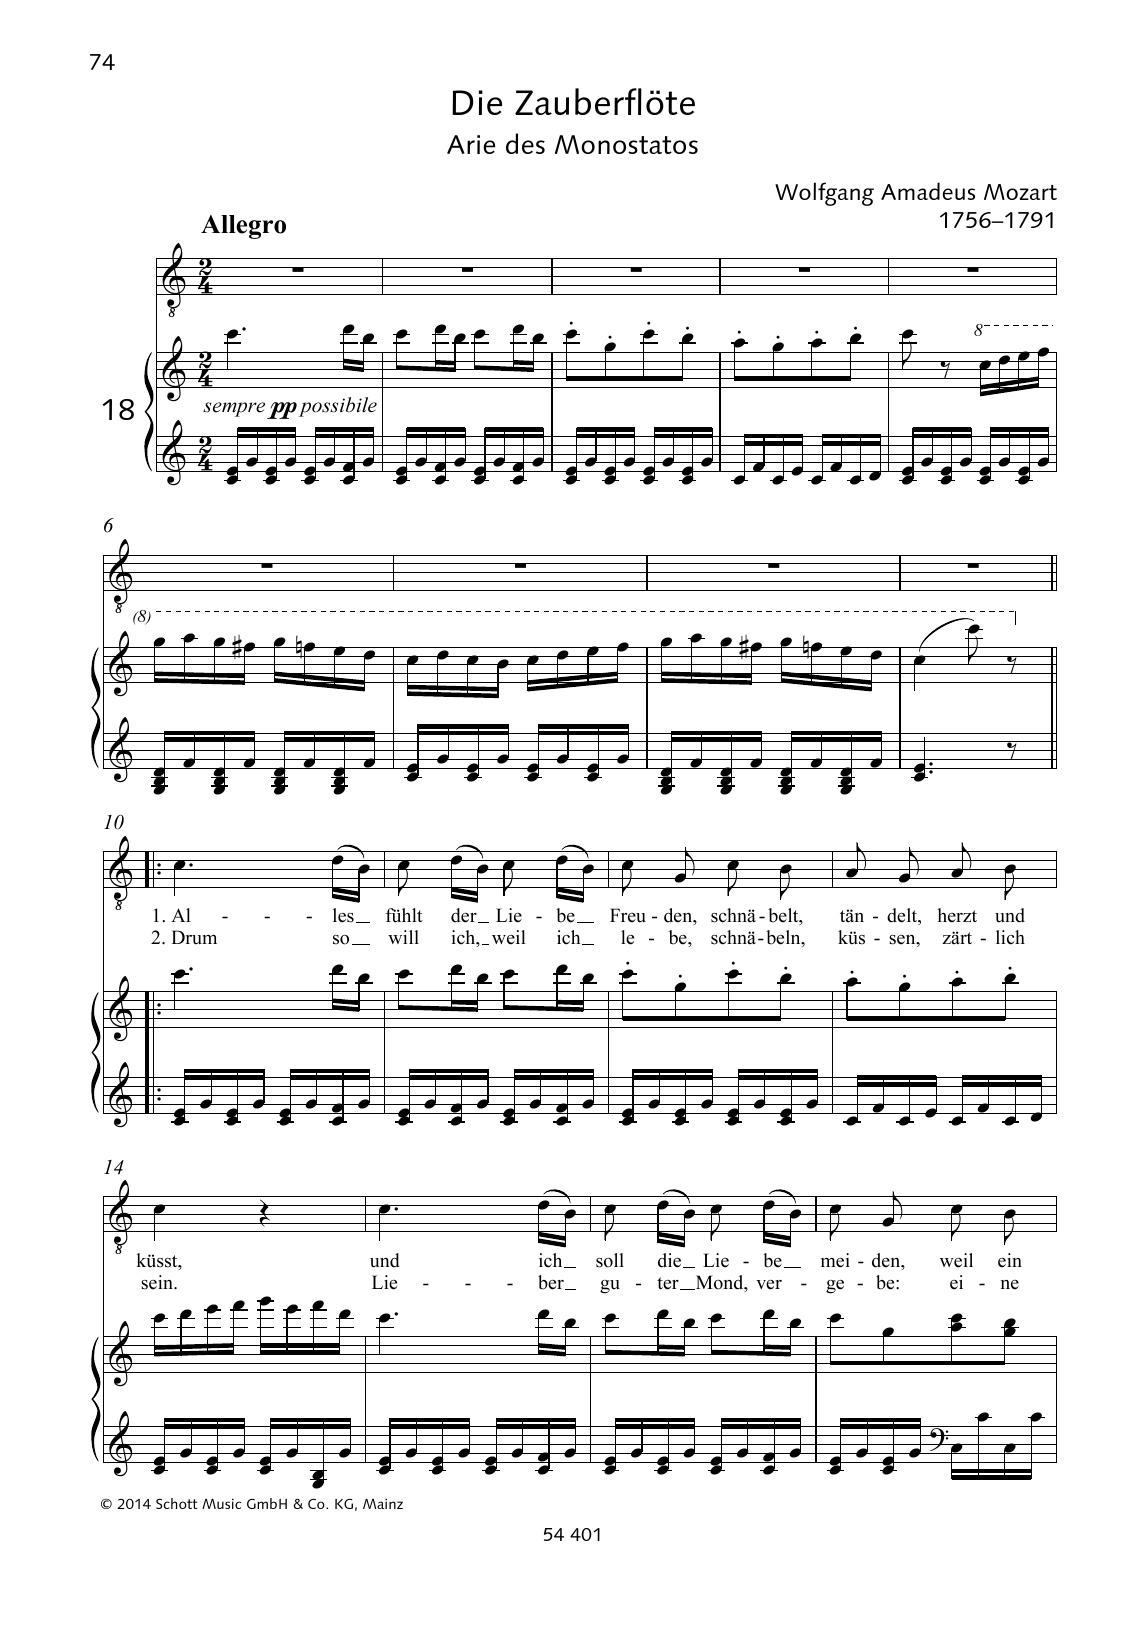 Wolfgang Amadeus Mozart Alles fühlt der Liebe Freuden Sheet Music Notes & Chords for Piano & Vocal - Download or Print PDF